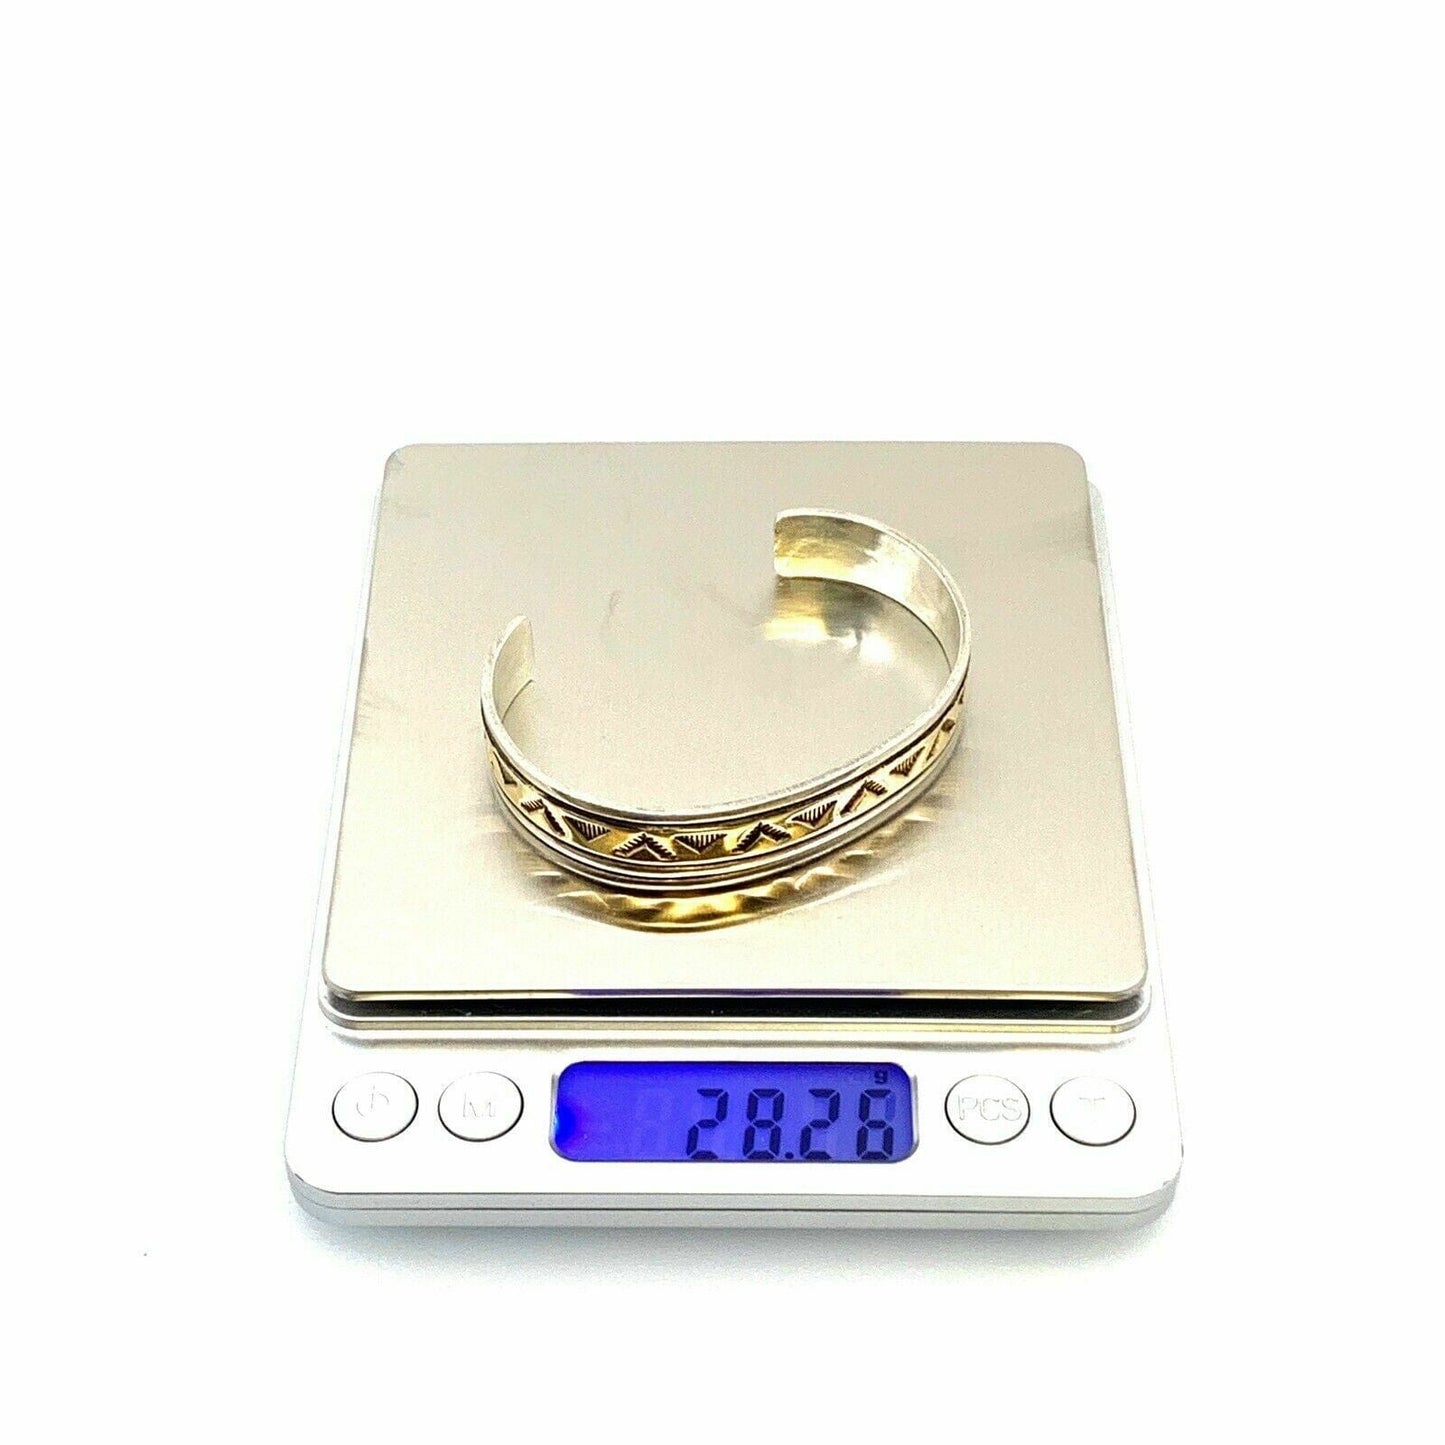 Oscar Alexius Vintage Navajo 14k Gold & Sterling Silver Cuff Bracelet - 6.75”